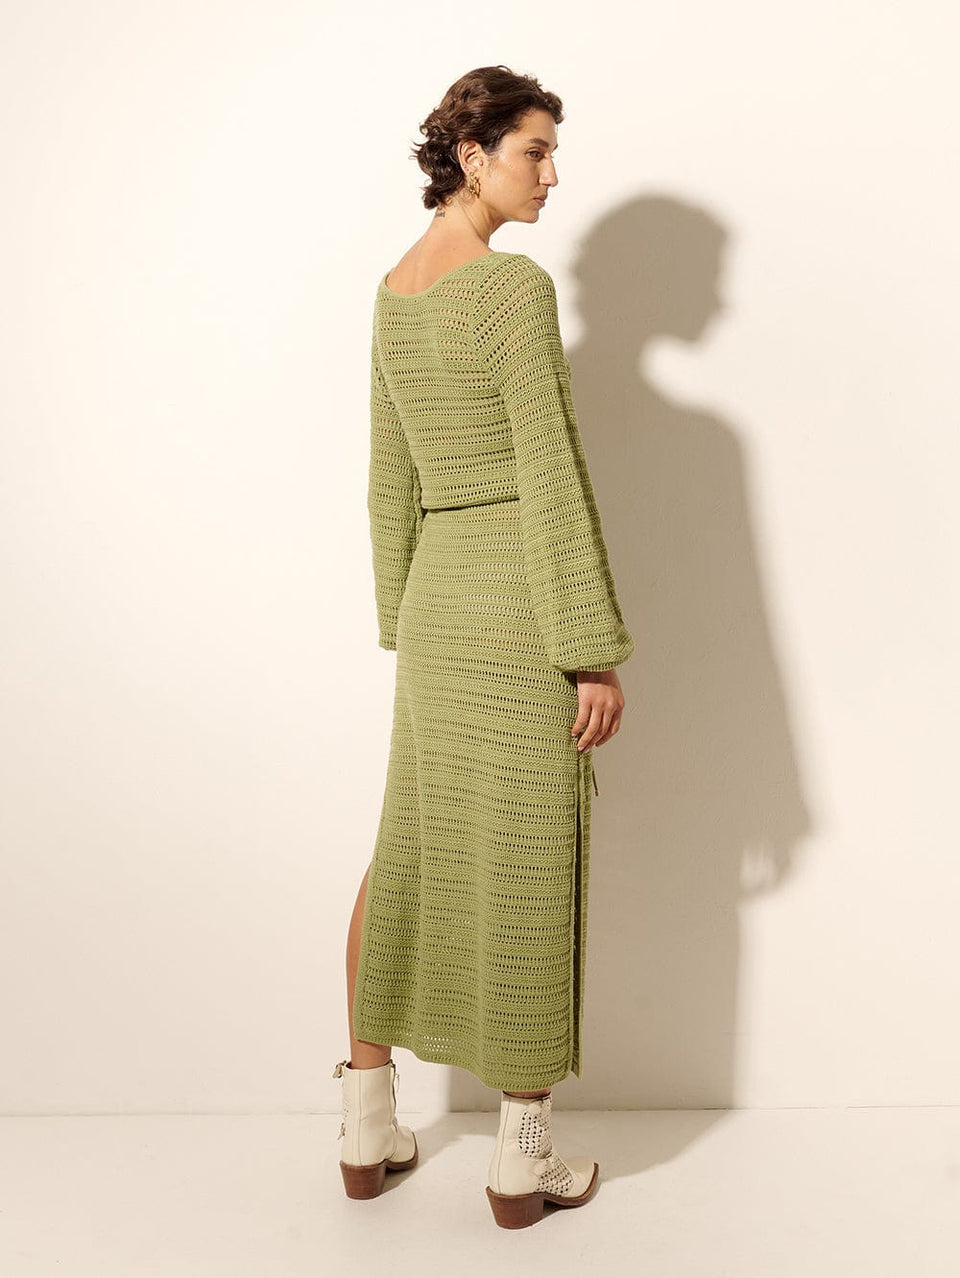 Pepe Knit Dress Avocado KIVARI | Model wears avocado green knit maxi dress back view